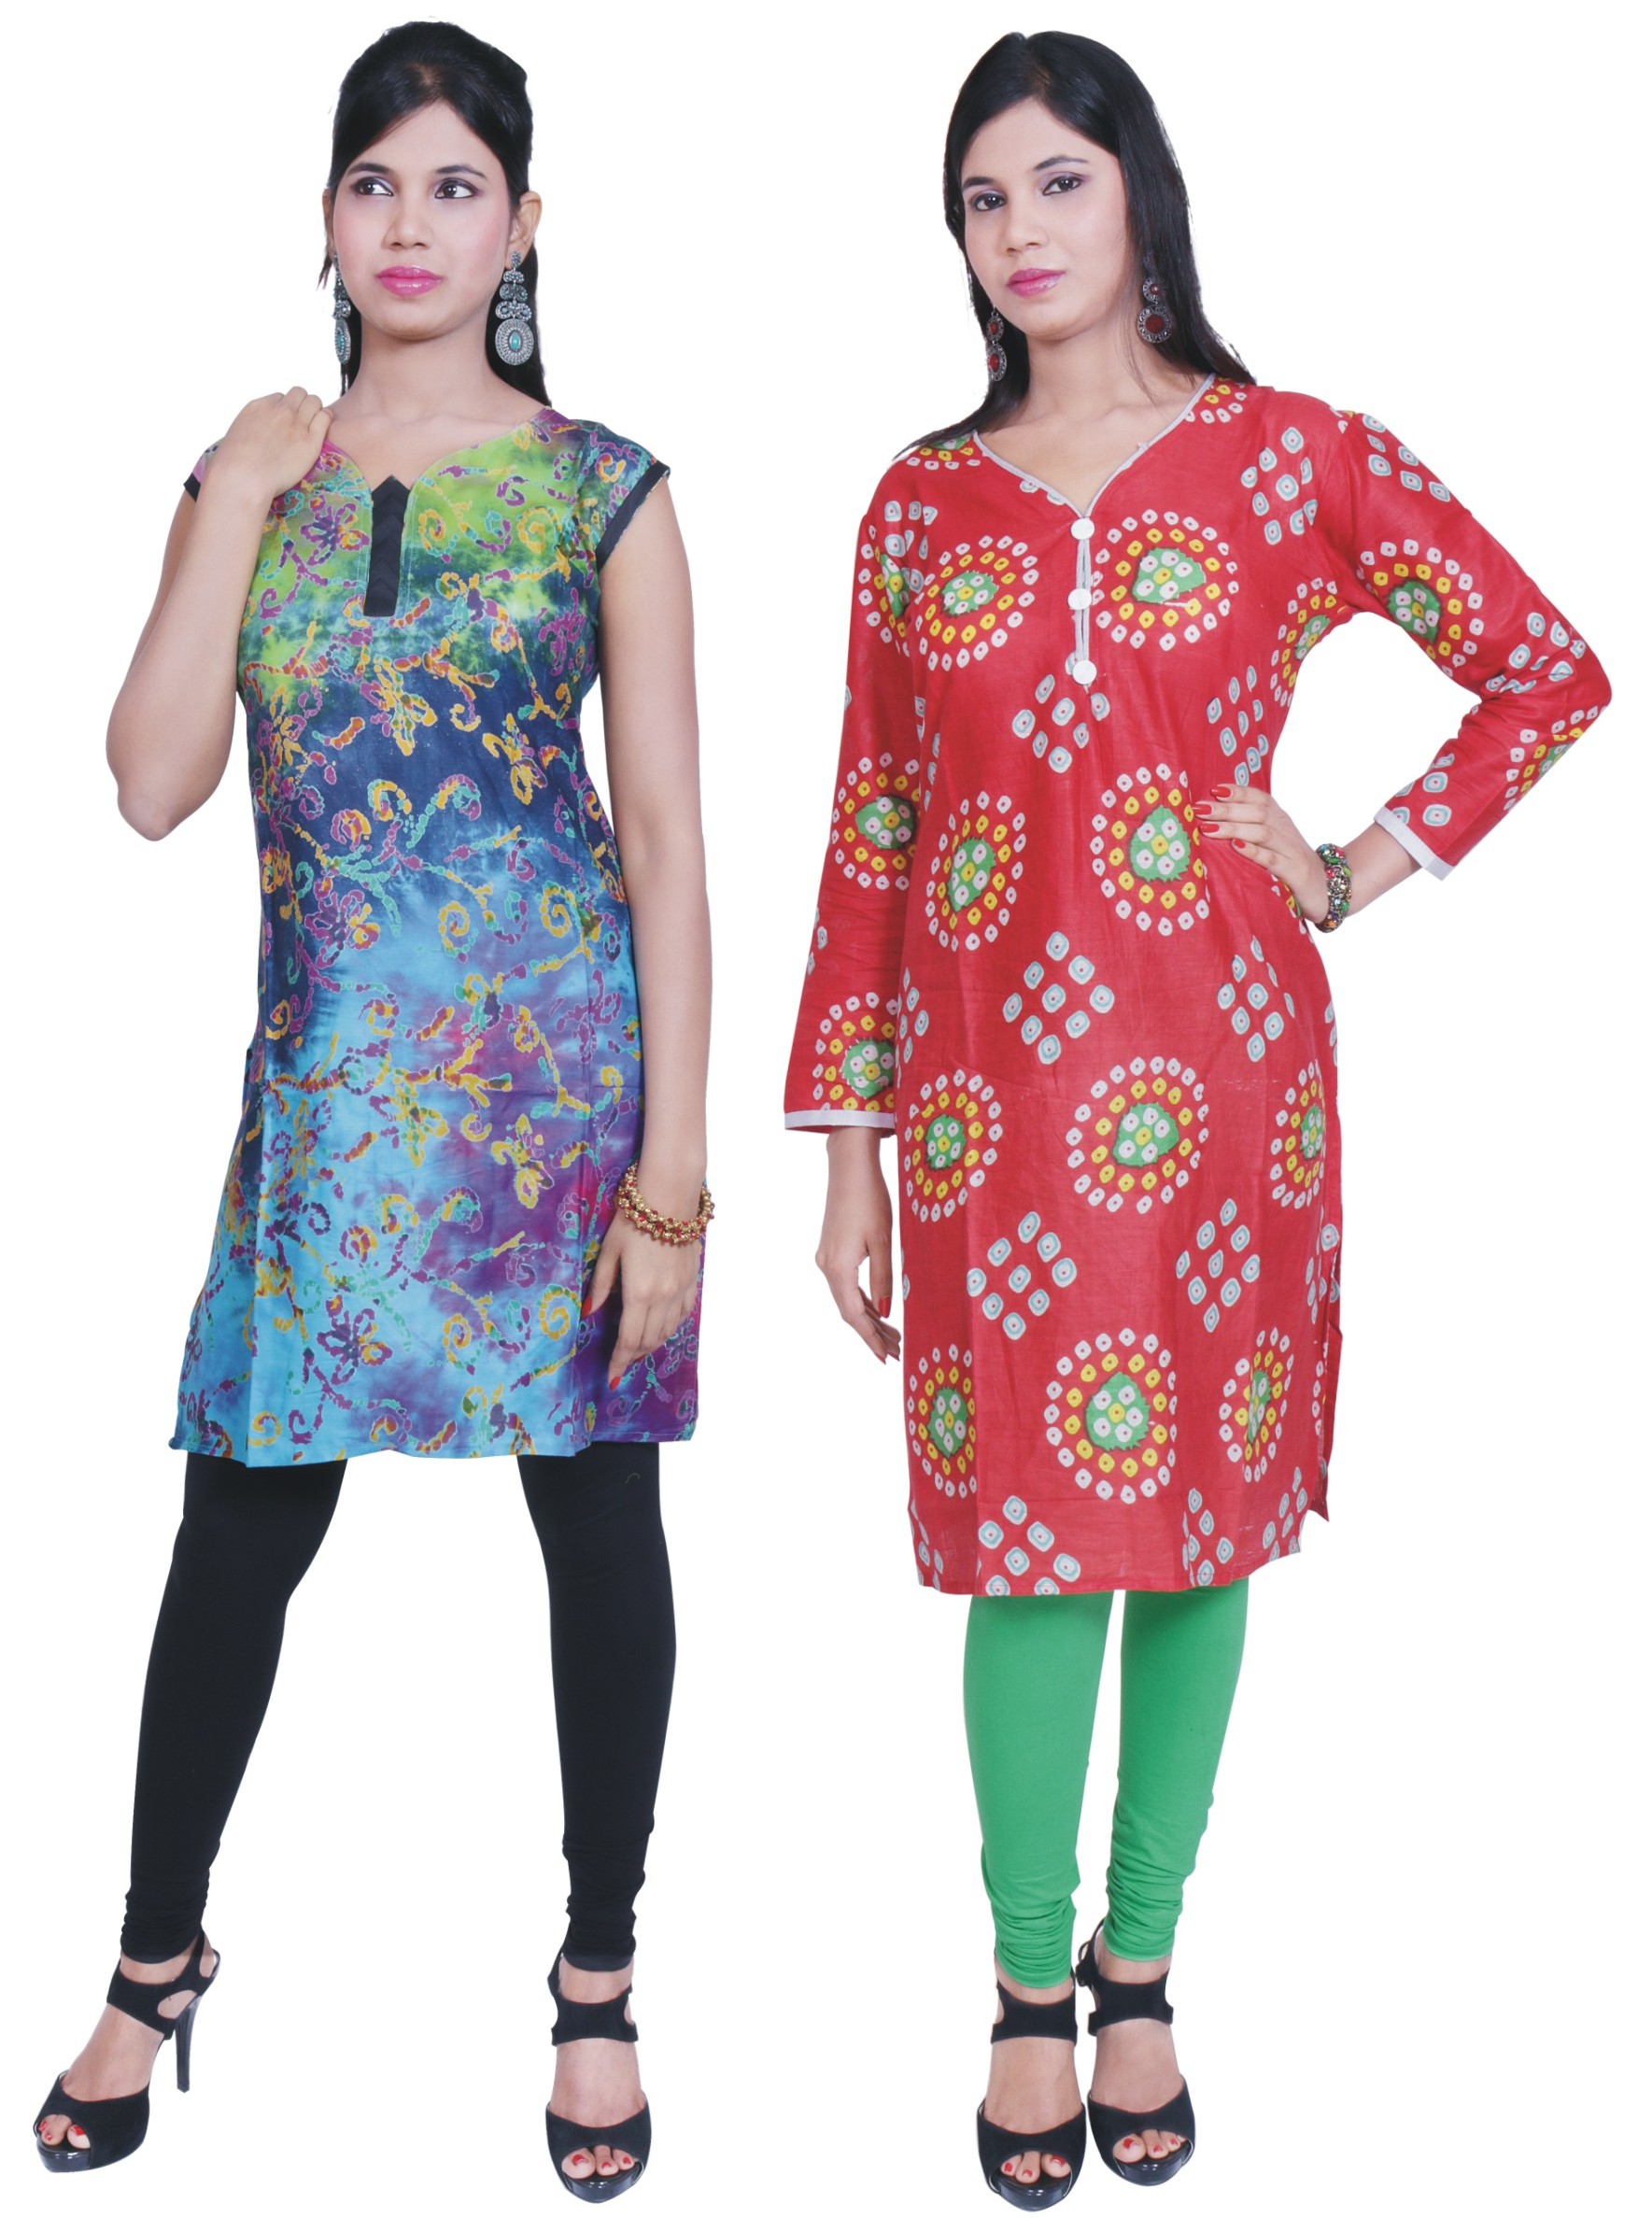 Combo Offer - 2 Girls Kurti + 1 legging Free In India - Shopclues Online